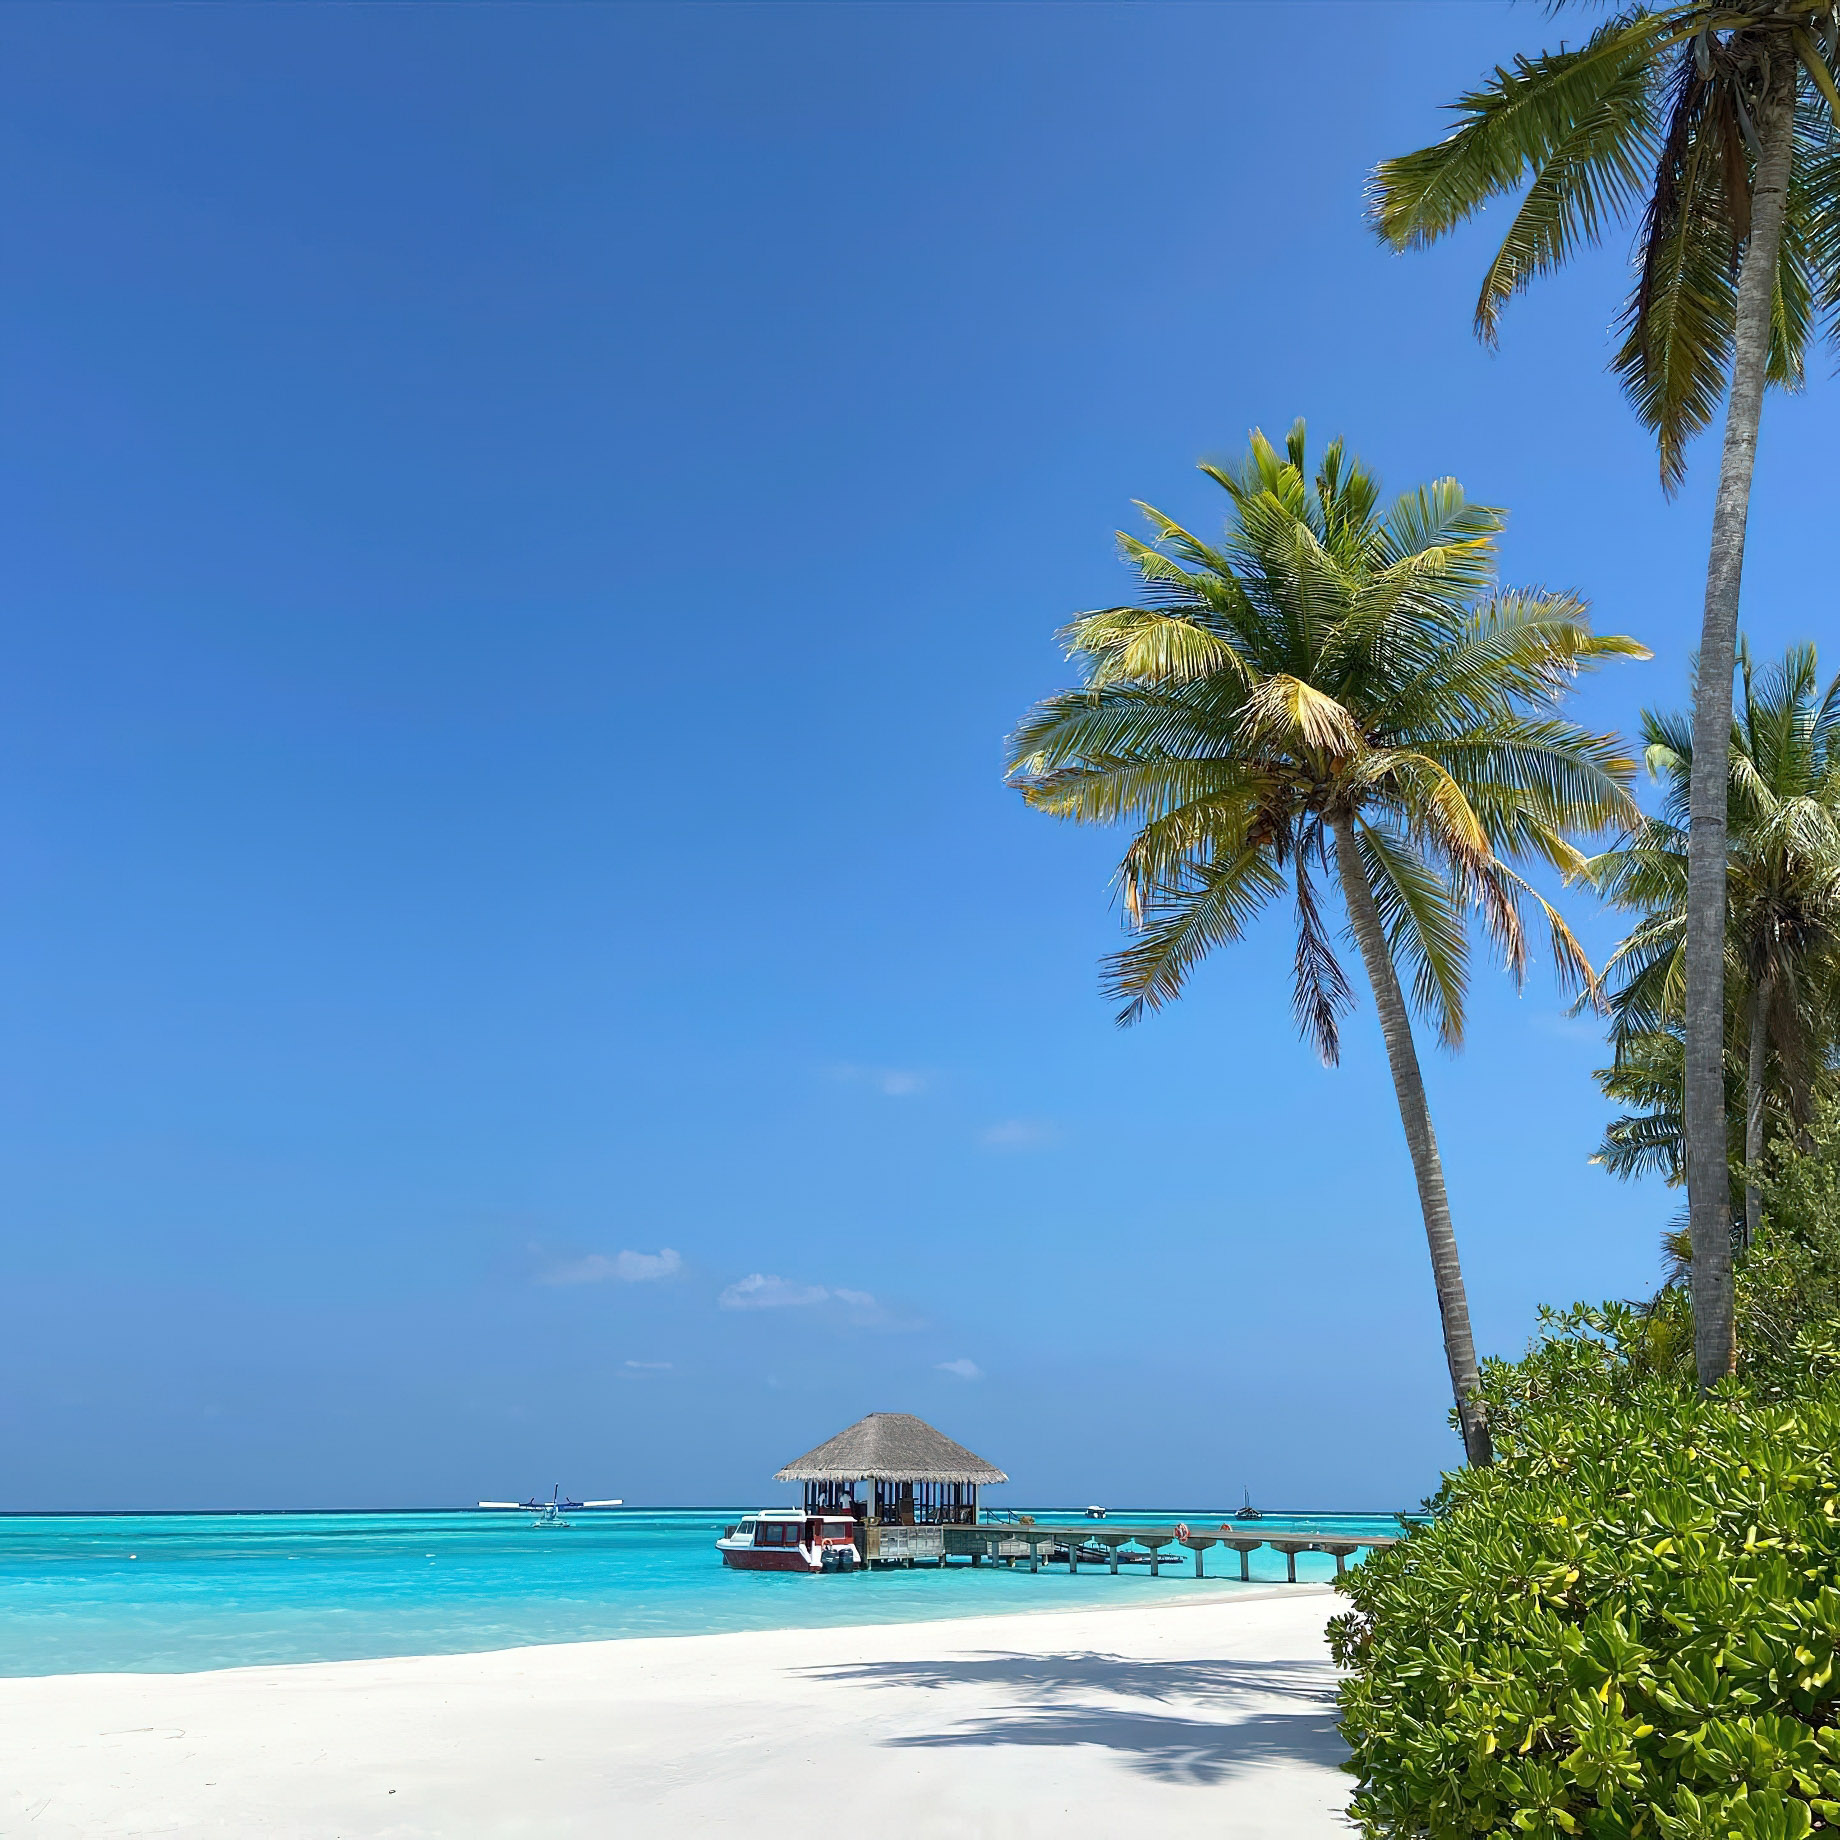 Niyama Private Islands Maldives Resort - Dhaalu Atoll, Maldives - Arrival Jetty Beach View